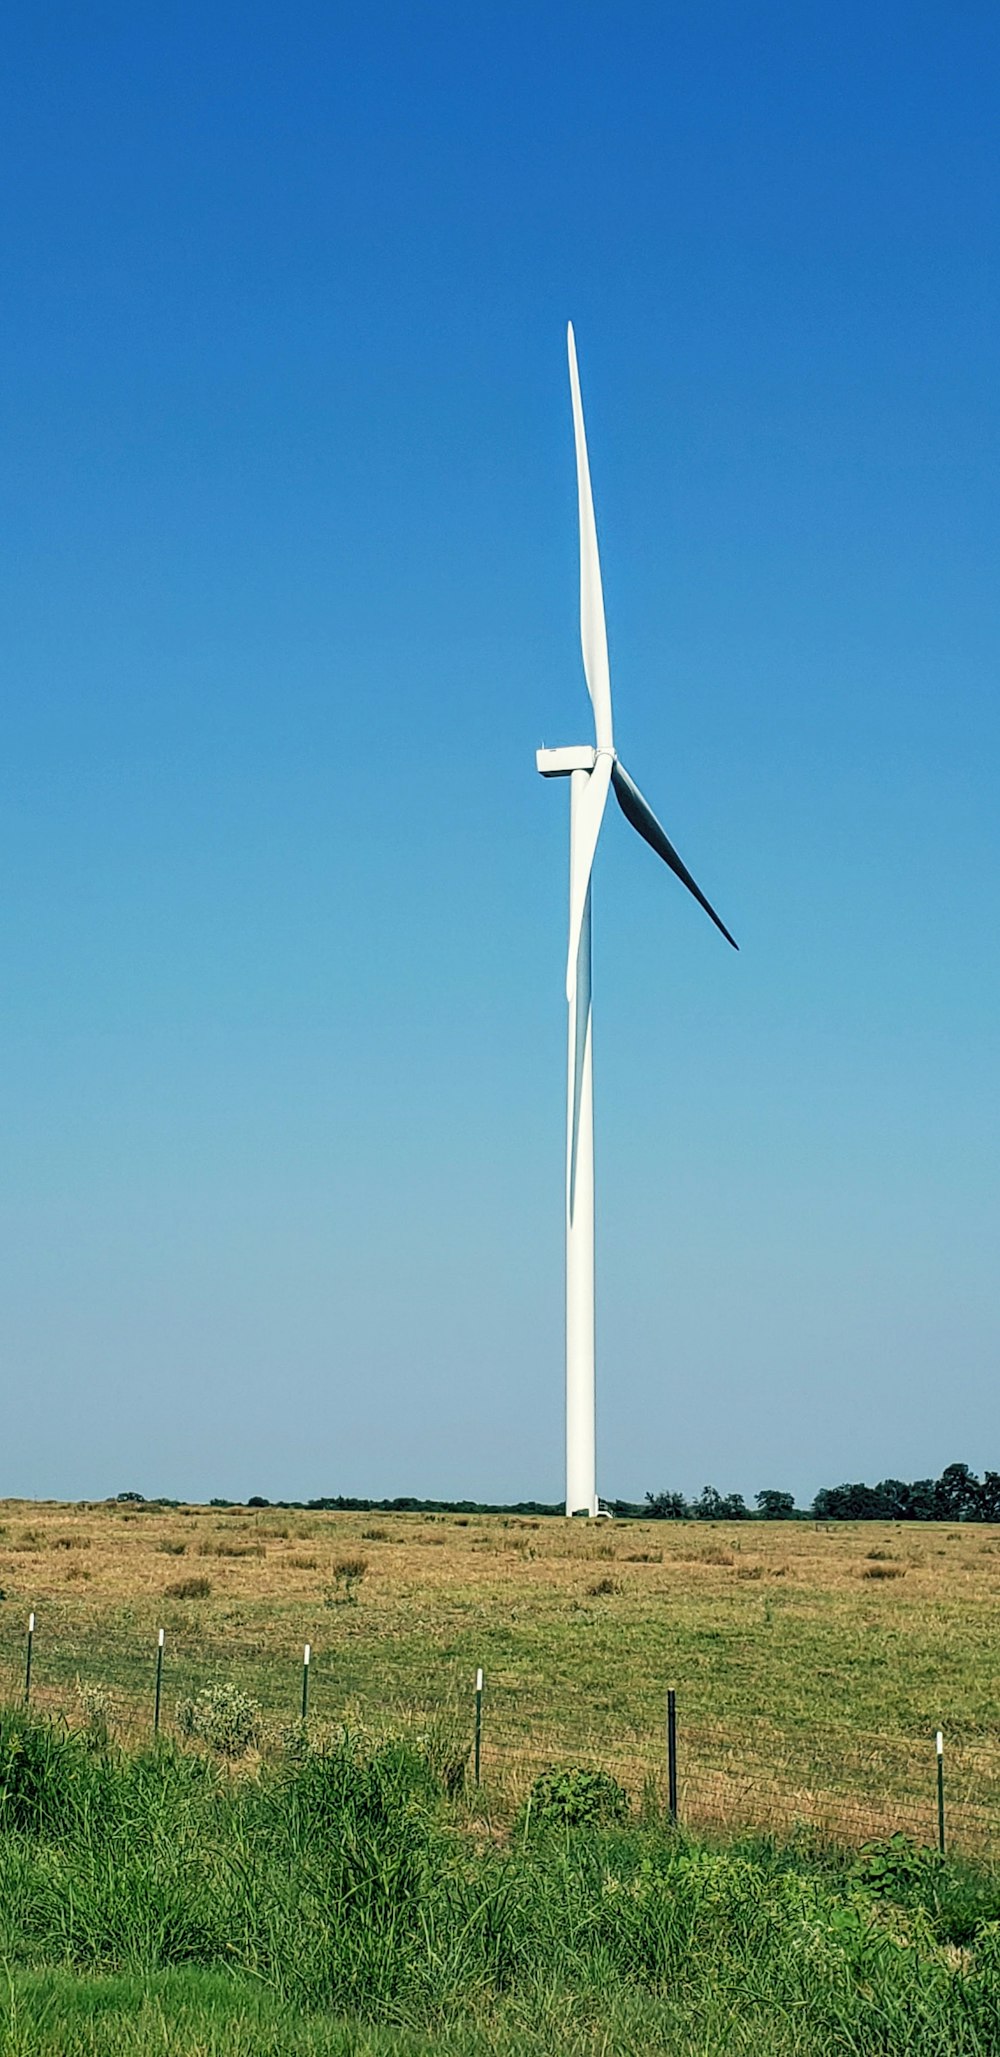 a large white wind turbine in a grassy field